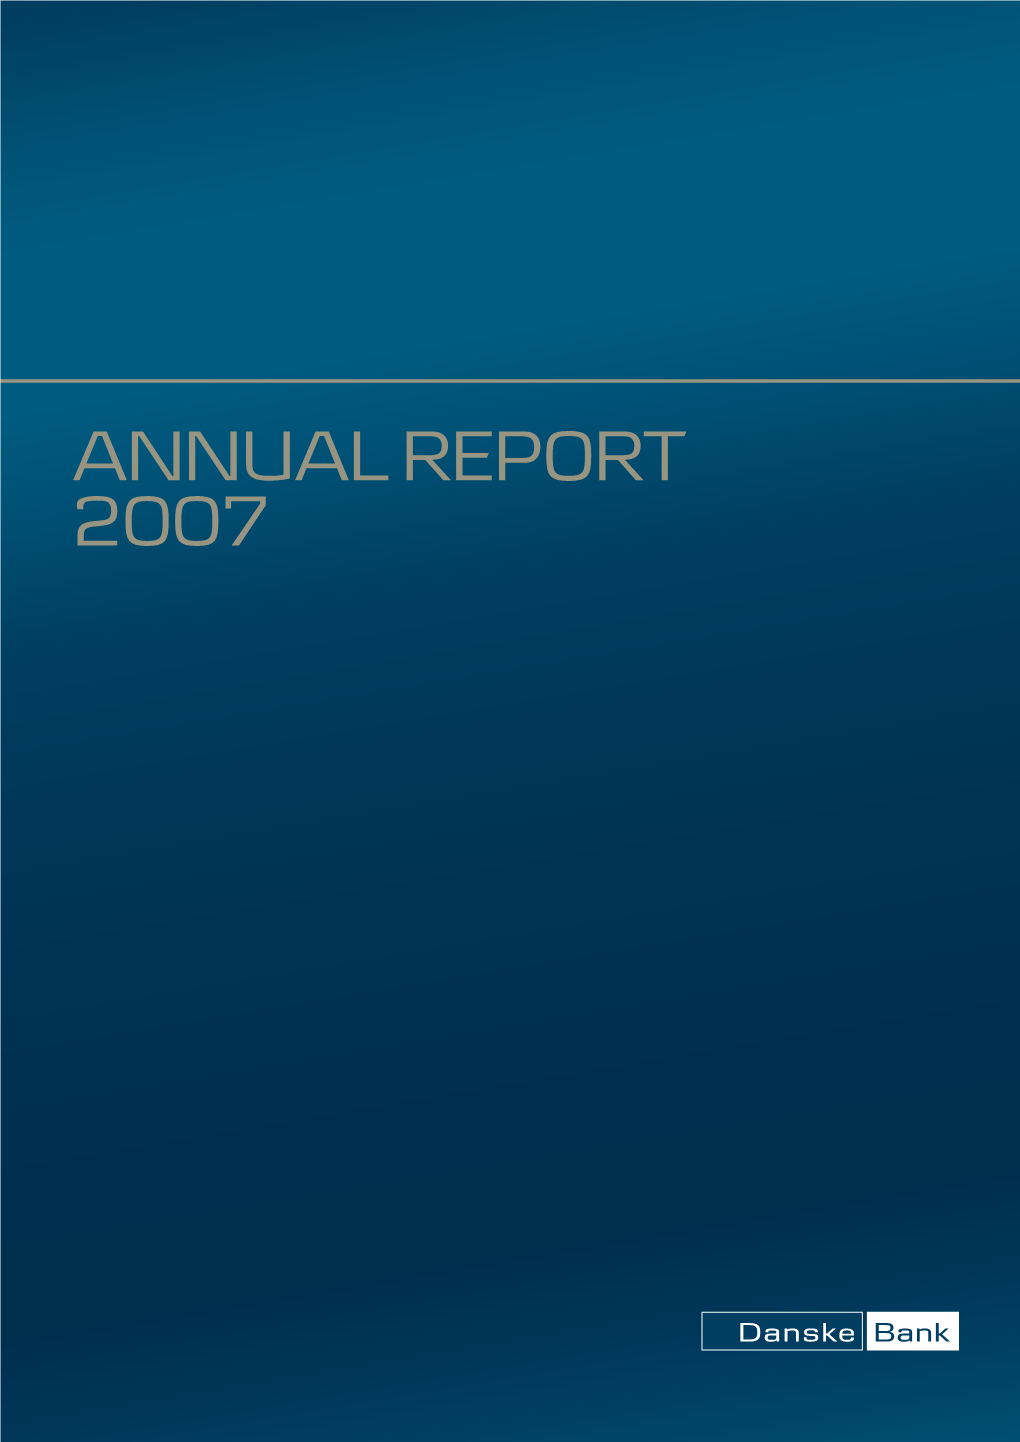 DANSKE BANK ANNUAL REPORT 2007 Summary